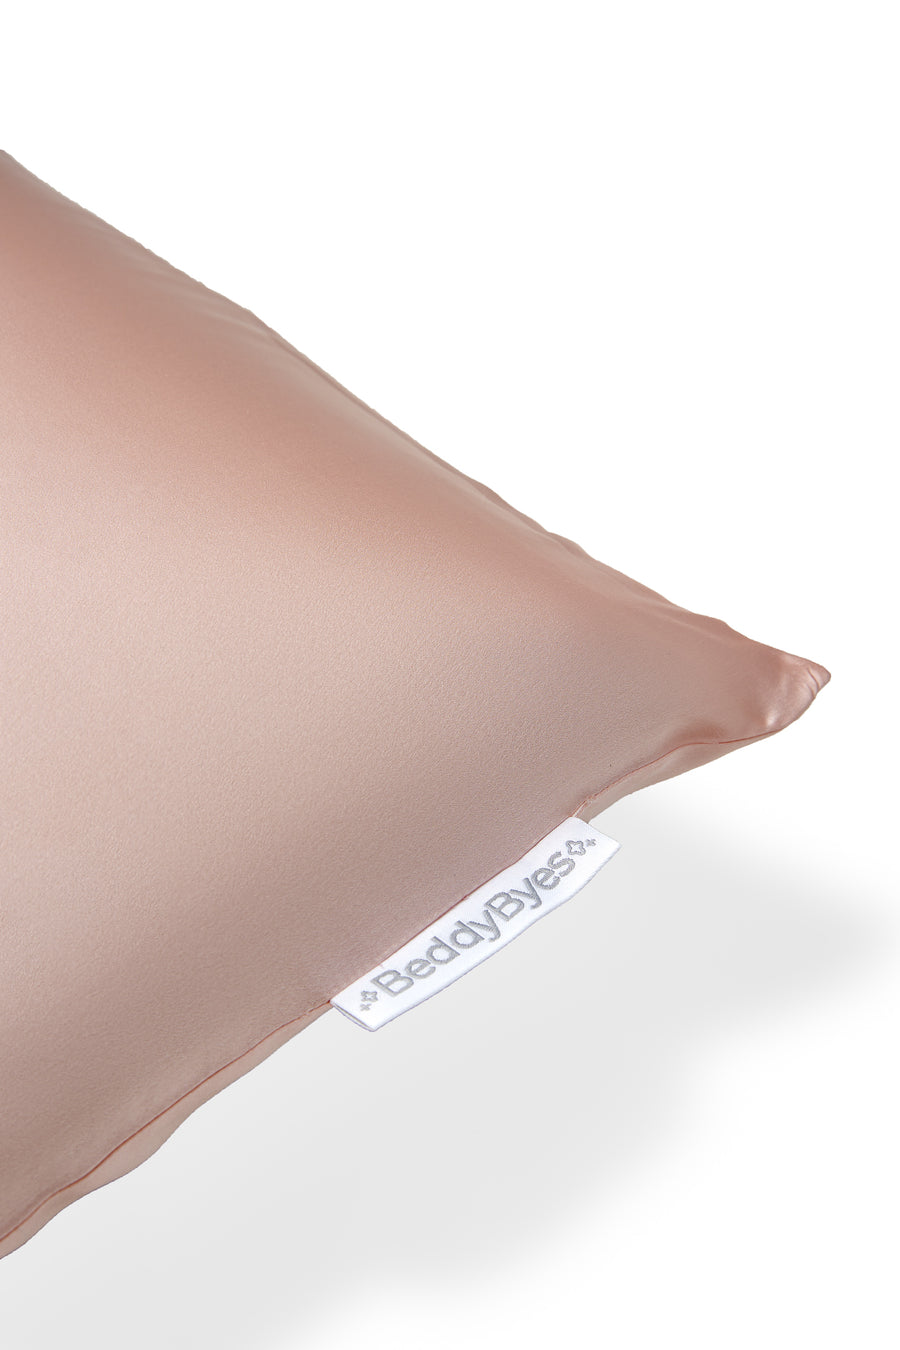 beddybyes blush pink Silk Queen Pillowcase logo label